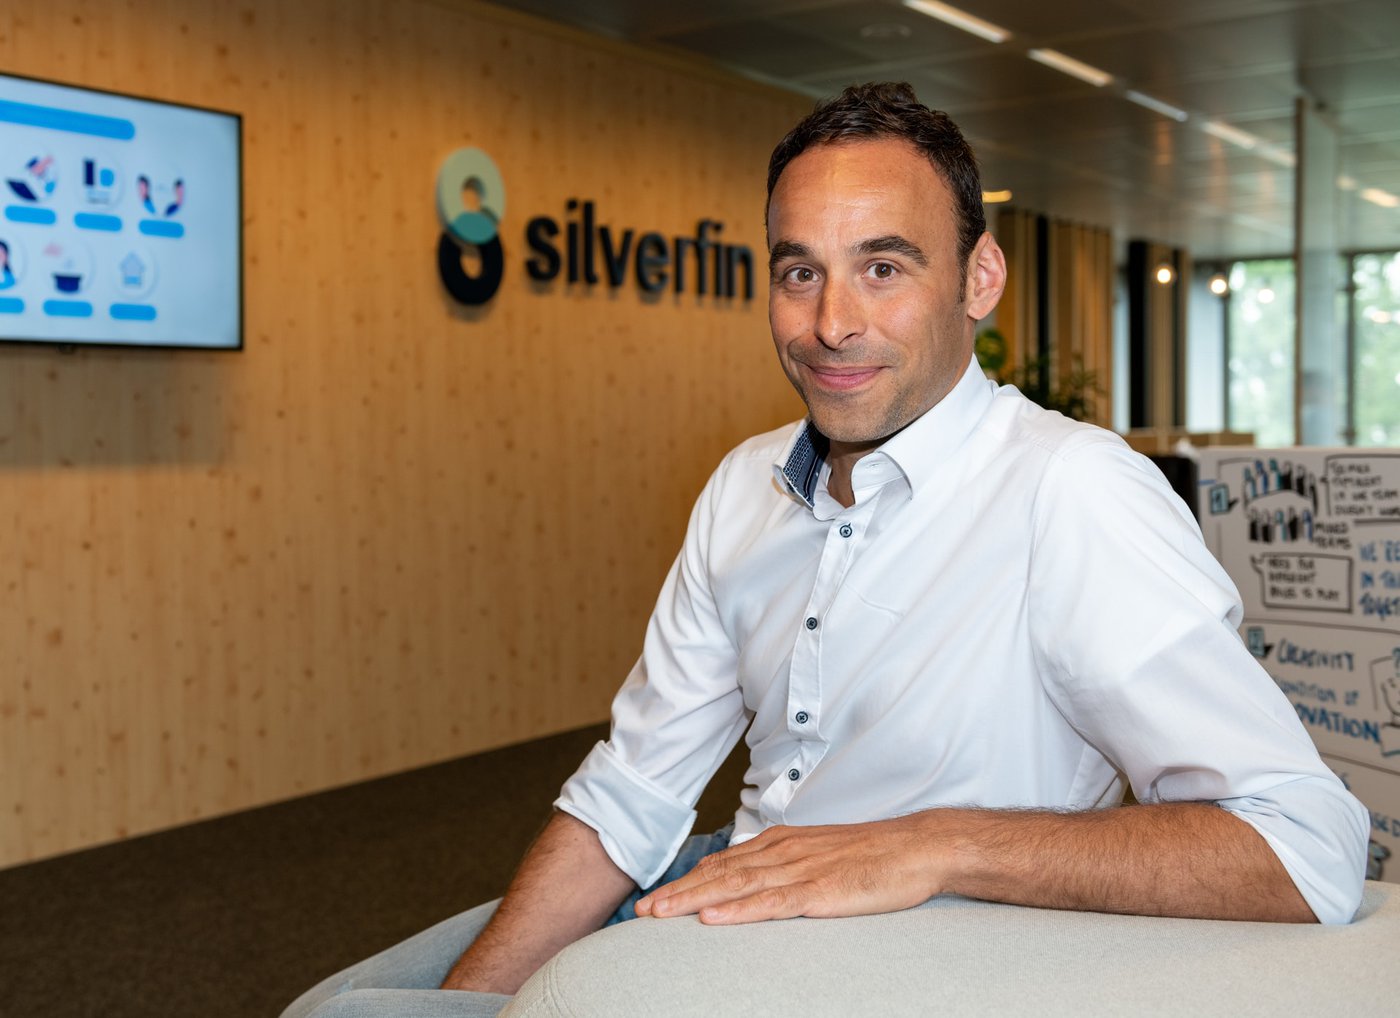 Gentse fintech scale-up is fier op unieke bedrijfscultuur: “Werken bij Silverfin, dat is allemaal samen vooruit gaan”